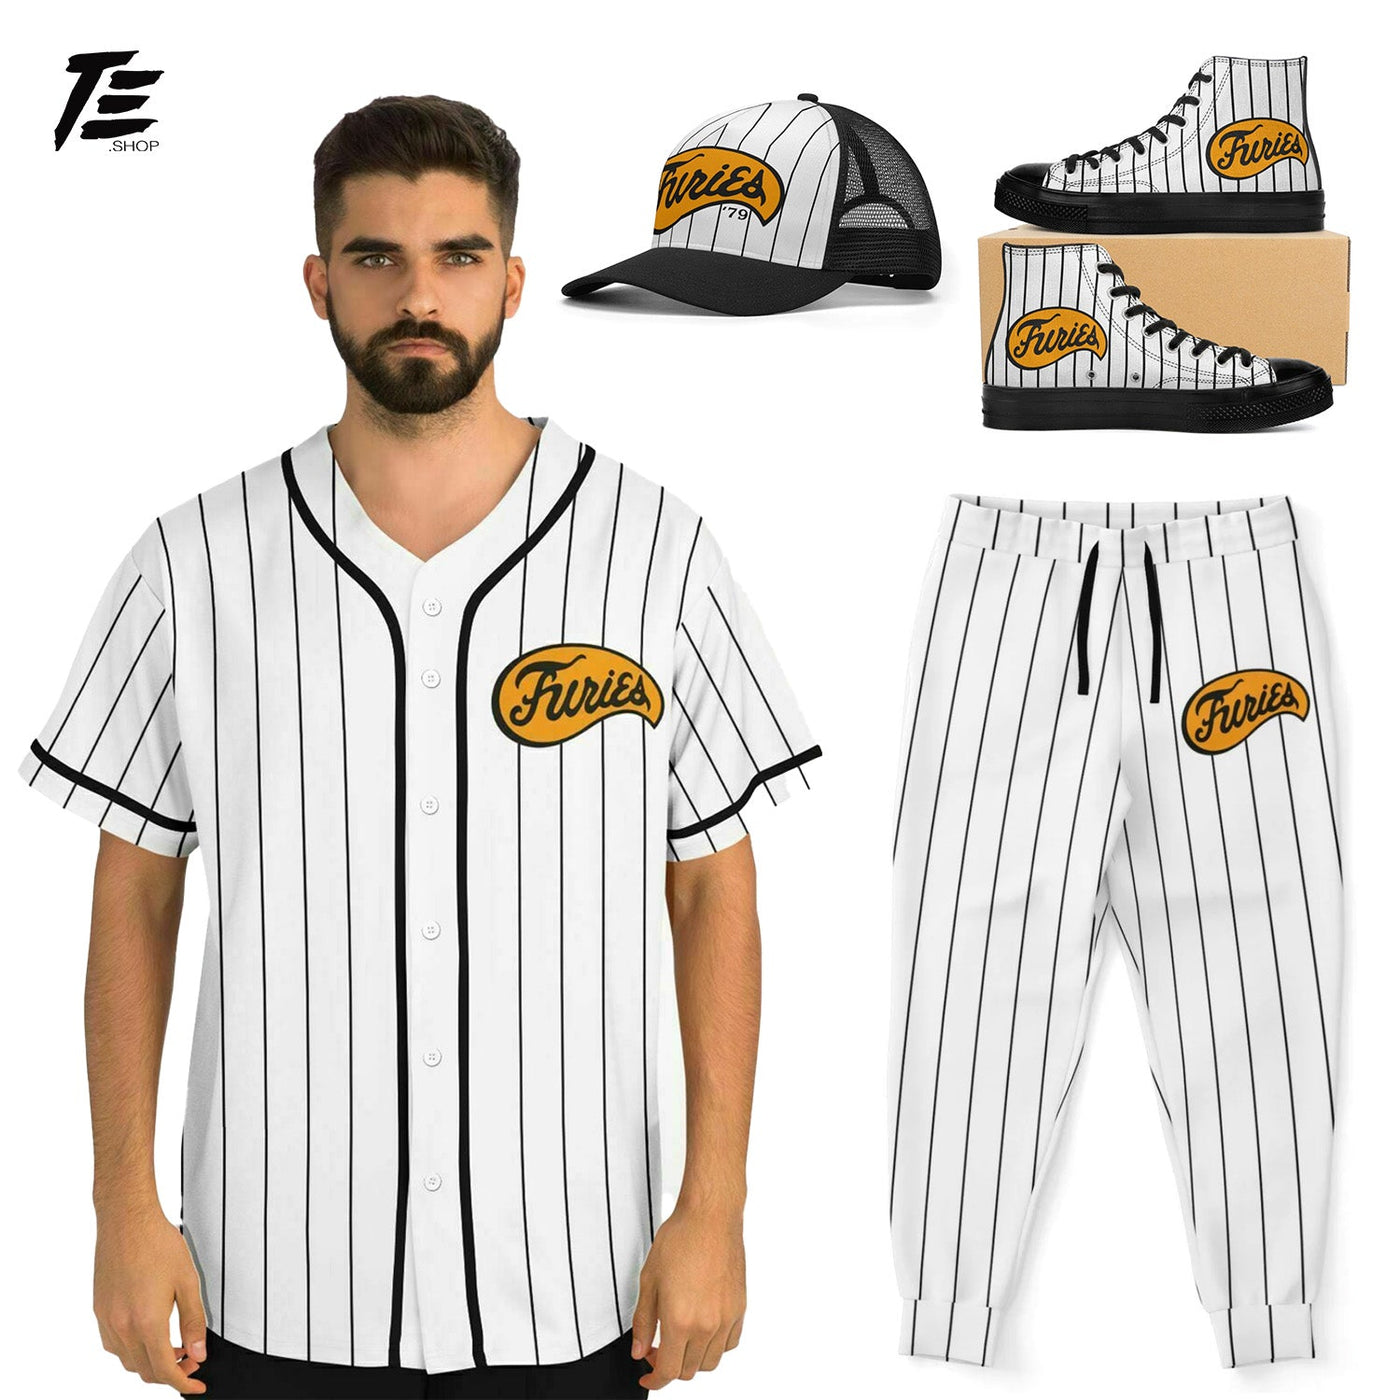 The Furies Baseball Outfit Bundle - The Warriors Baseball Gang